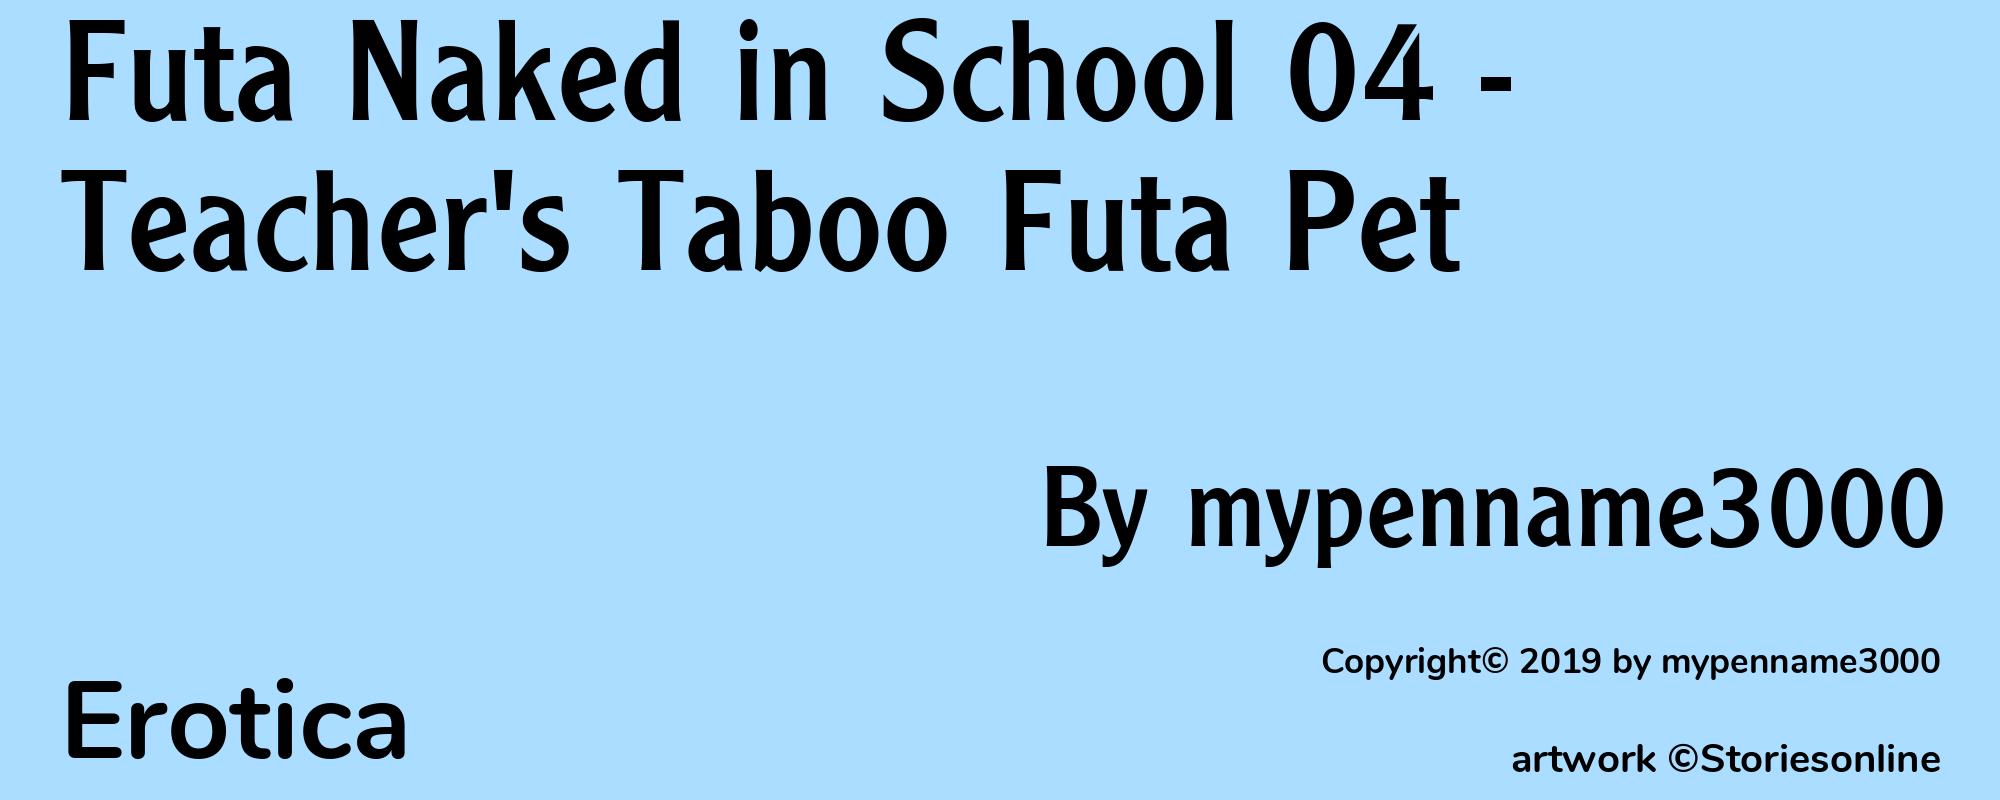 Futa Naked in School 04 - Teacher's Taboo Futa Pet - Cover